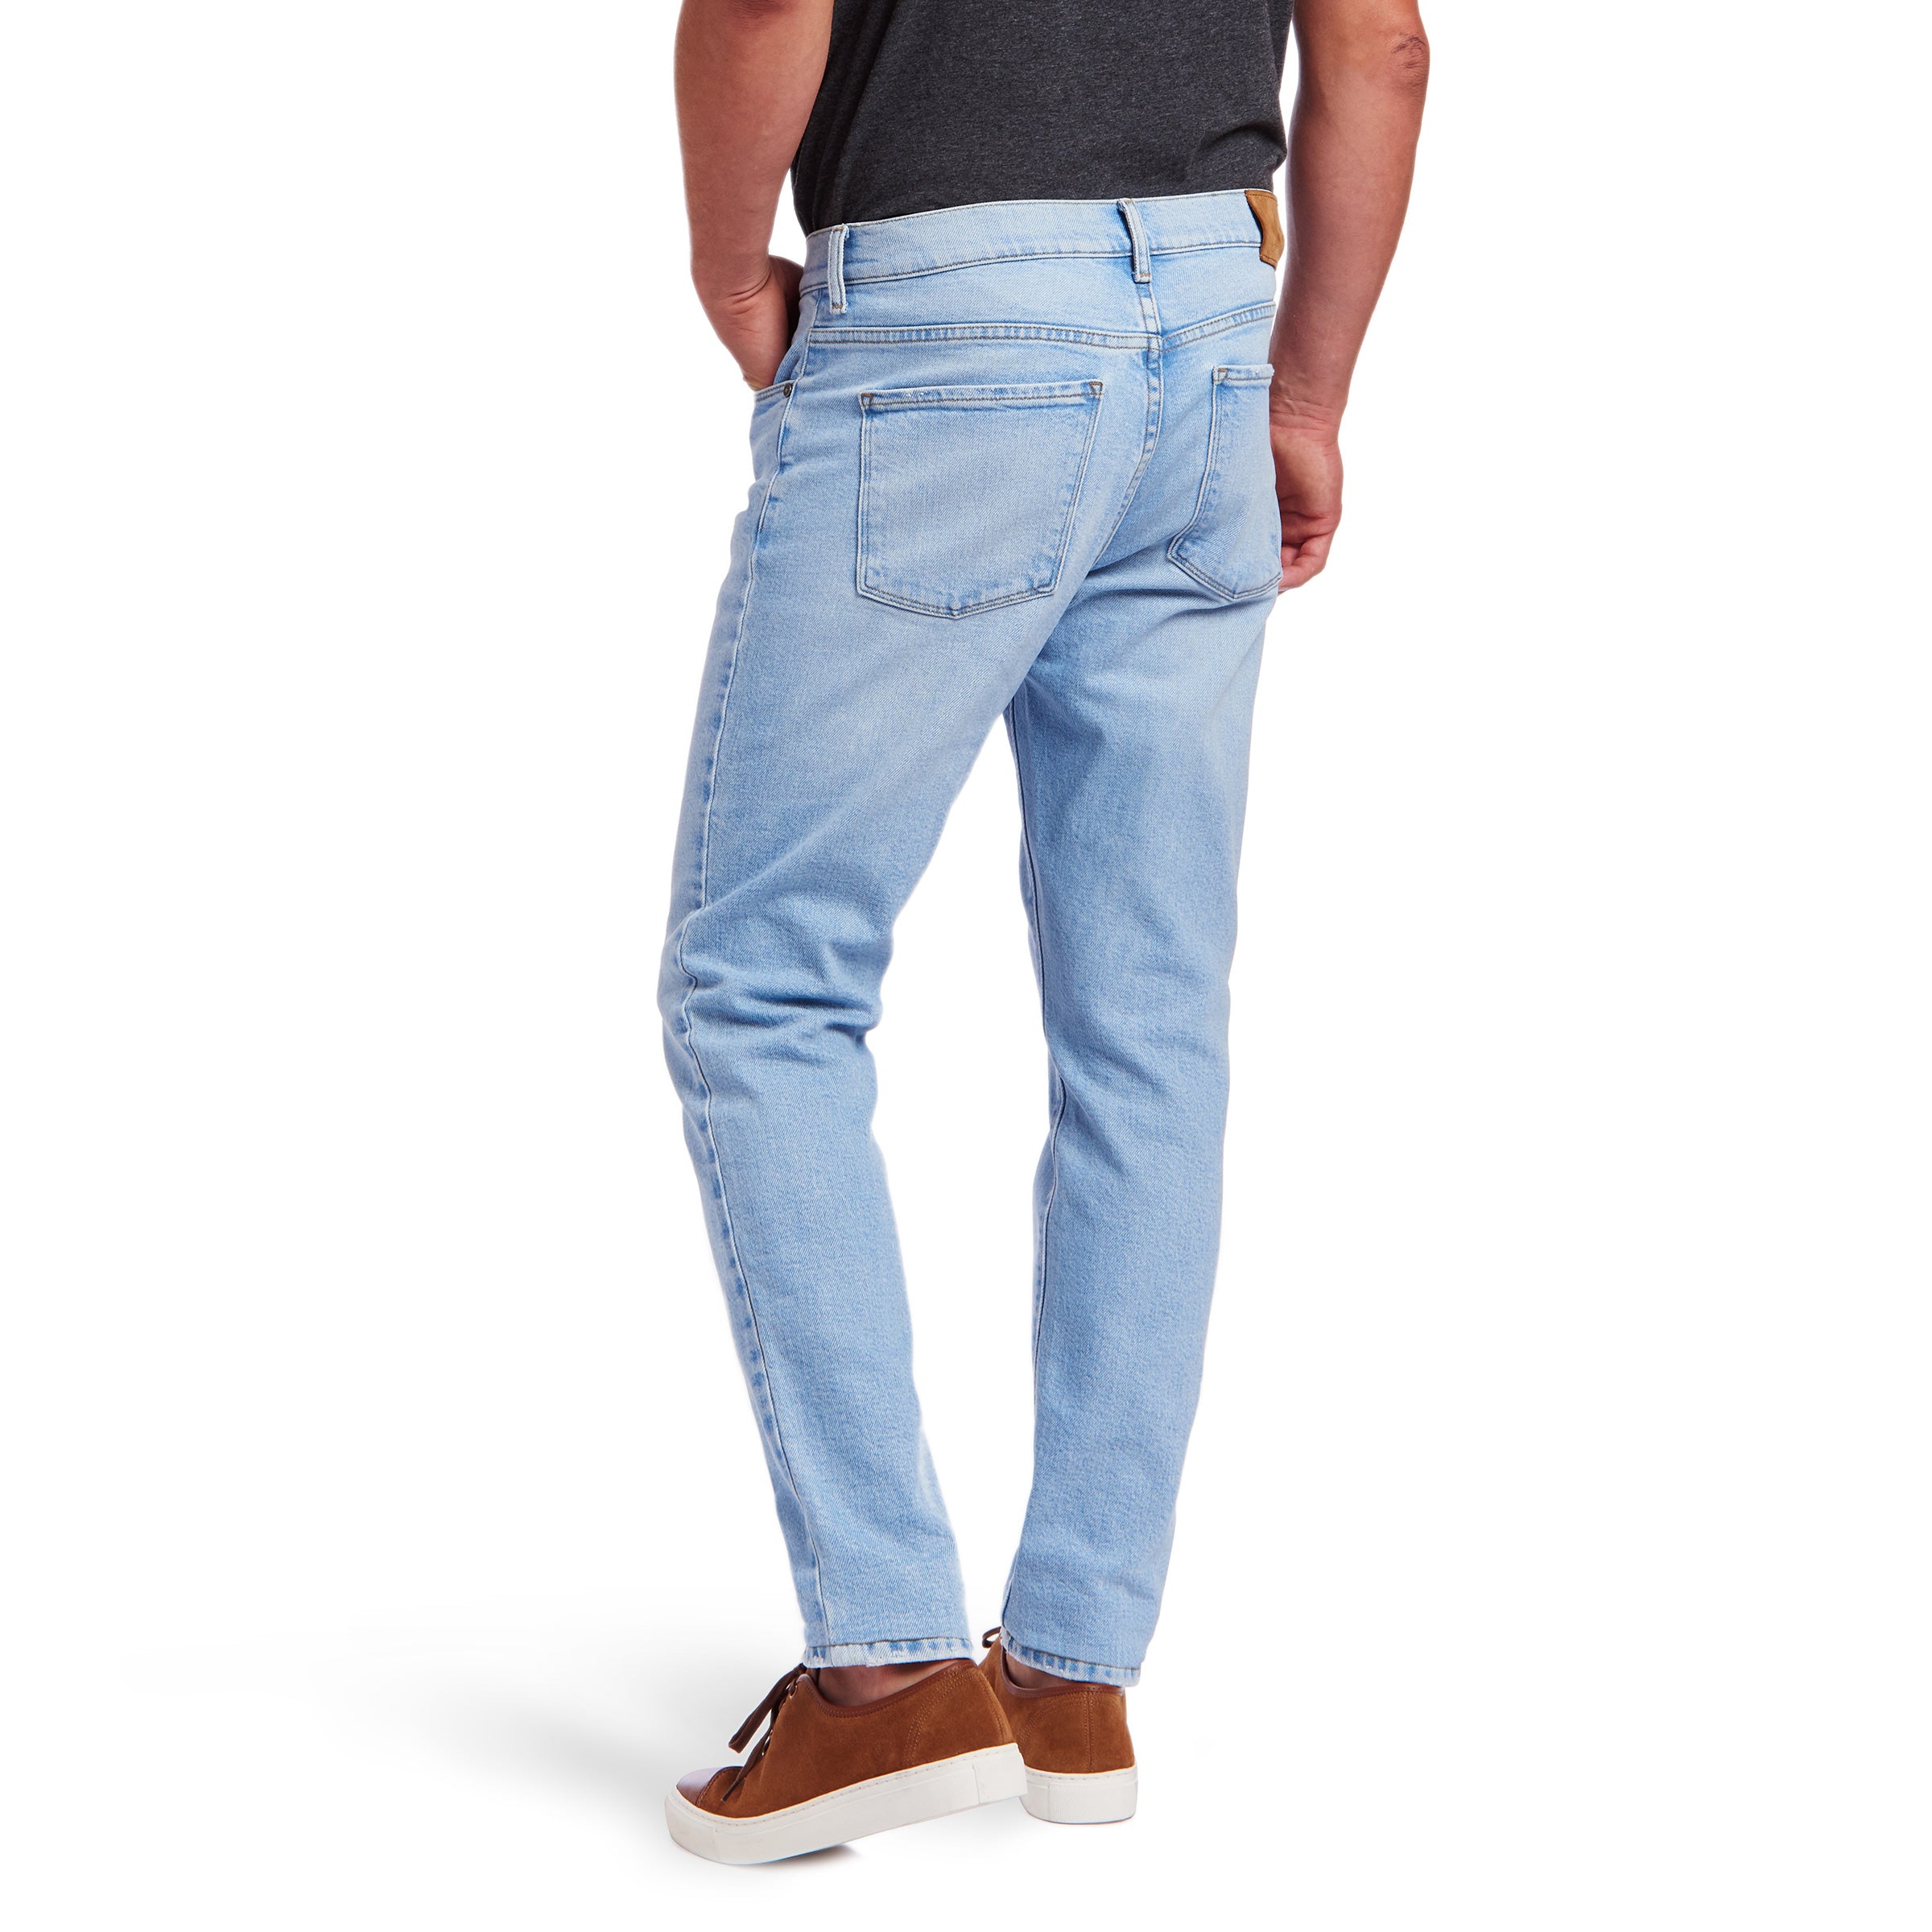 Men wearing Azul claro Skinny Hubert Jeans